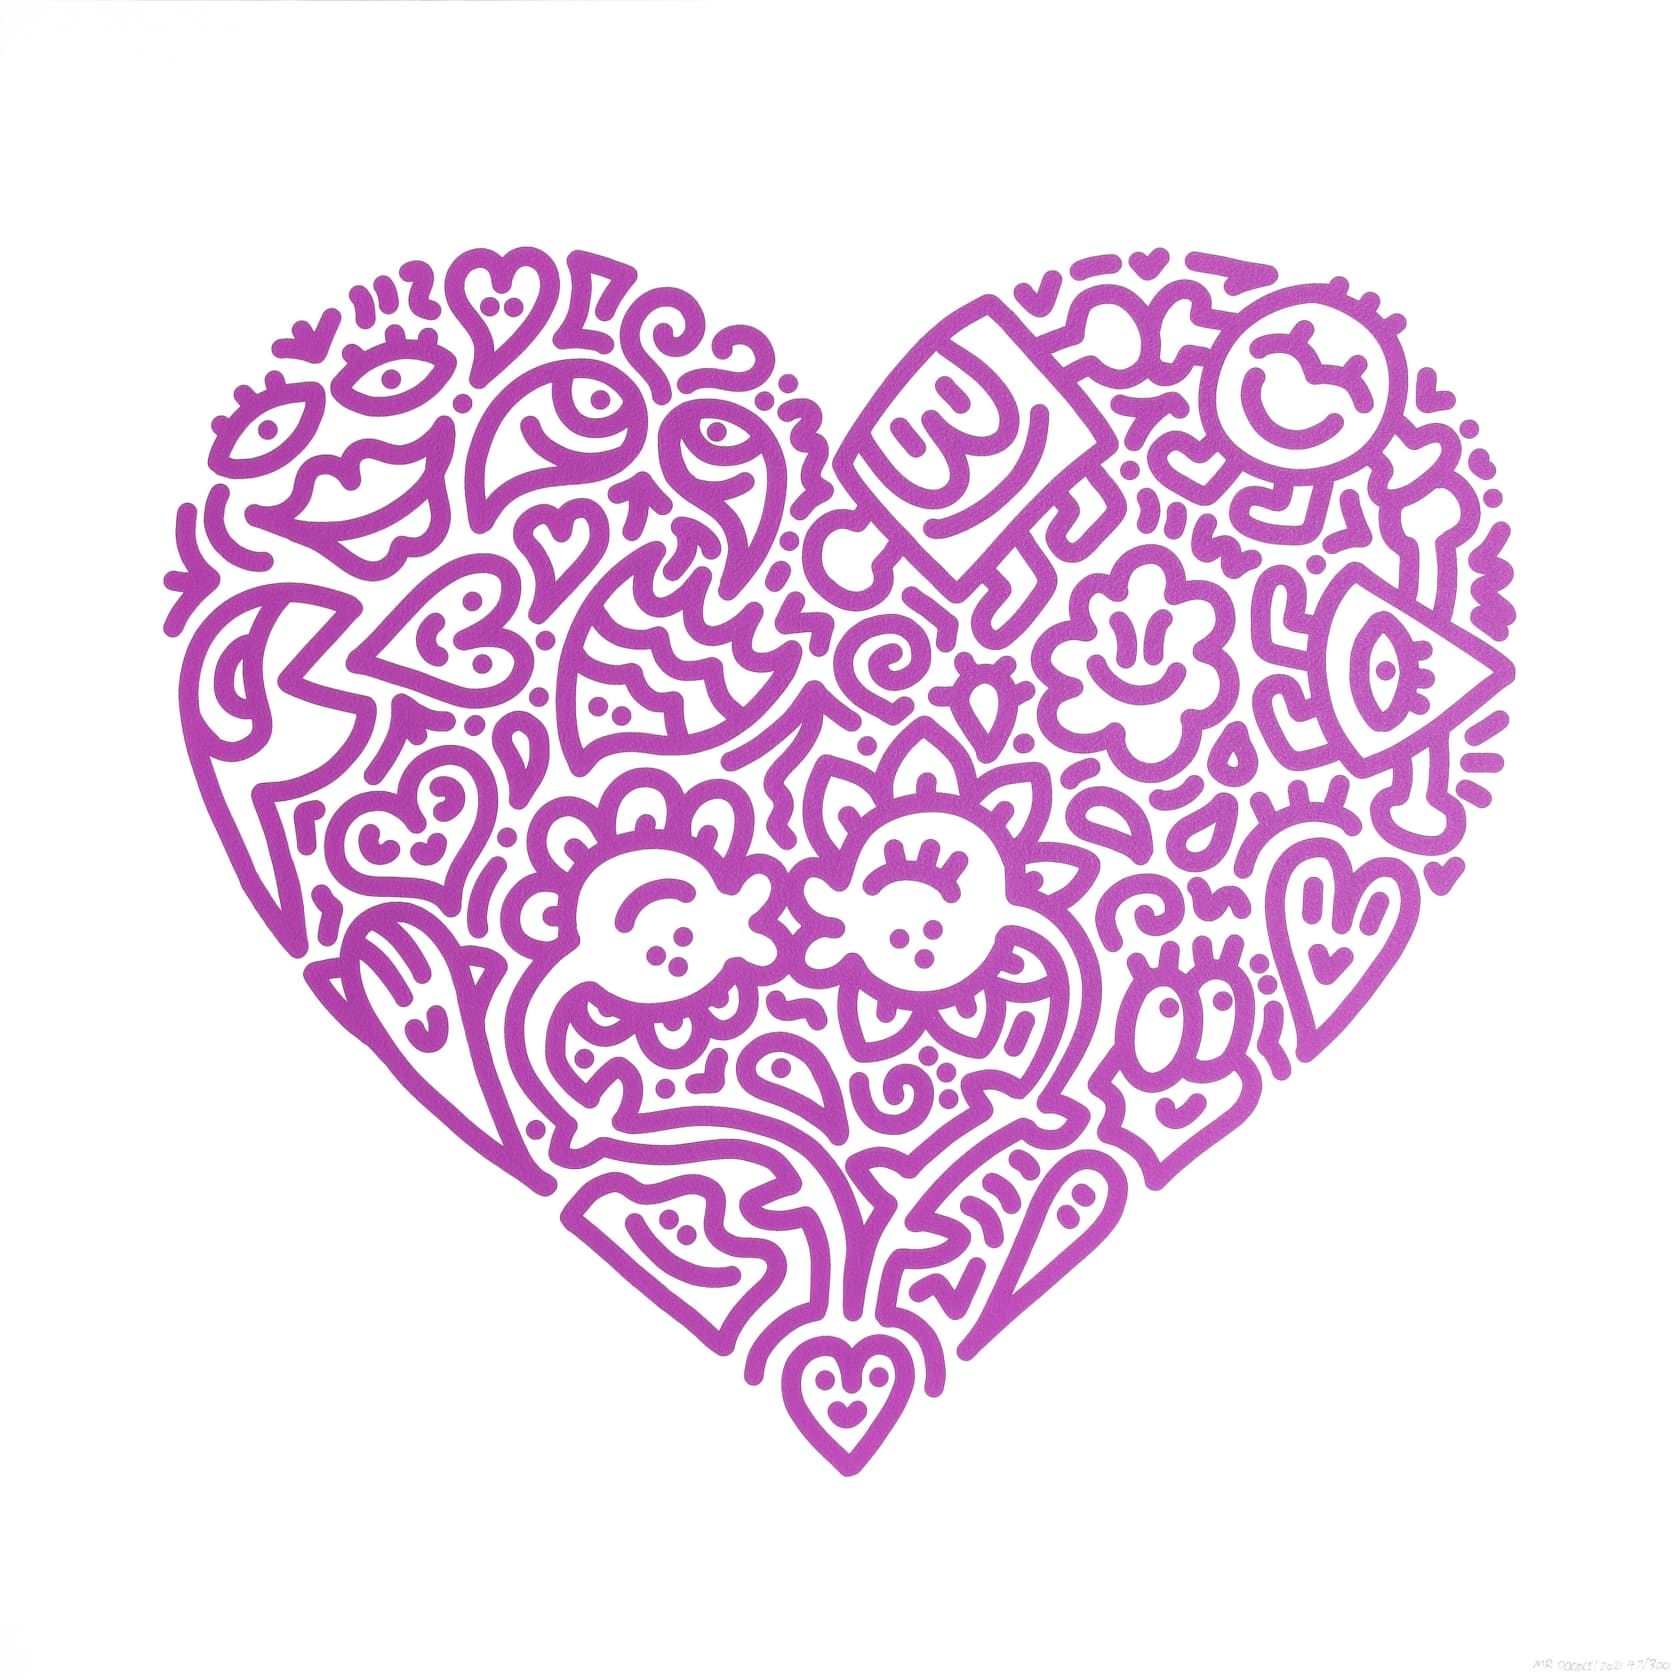 Mr. Doodle, Pop Heart (Purple), 2021